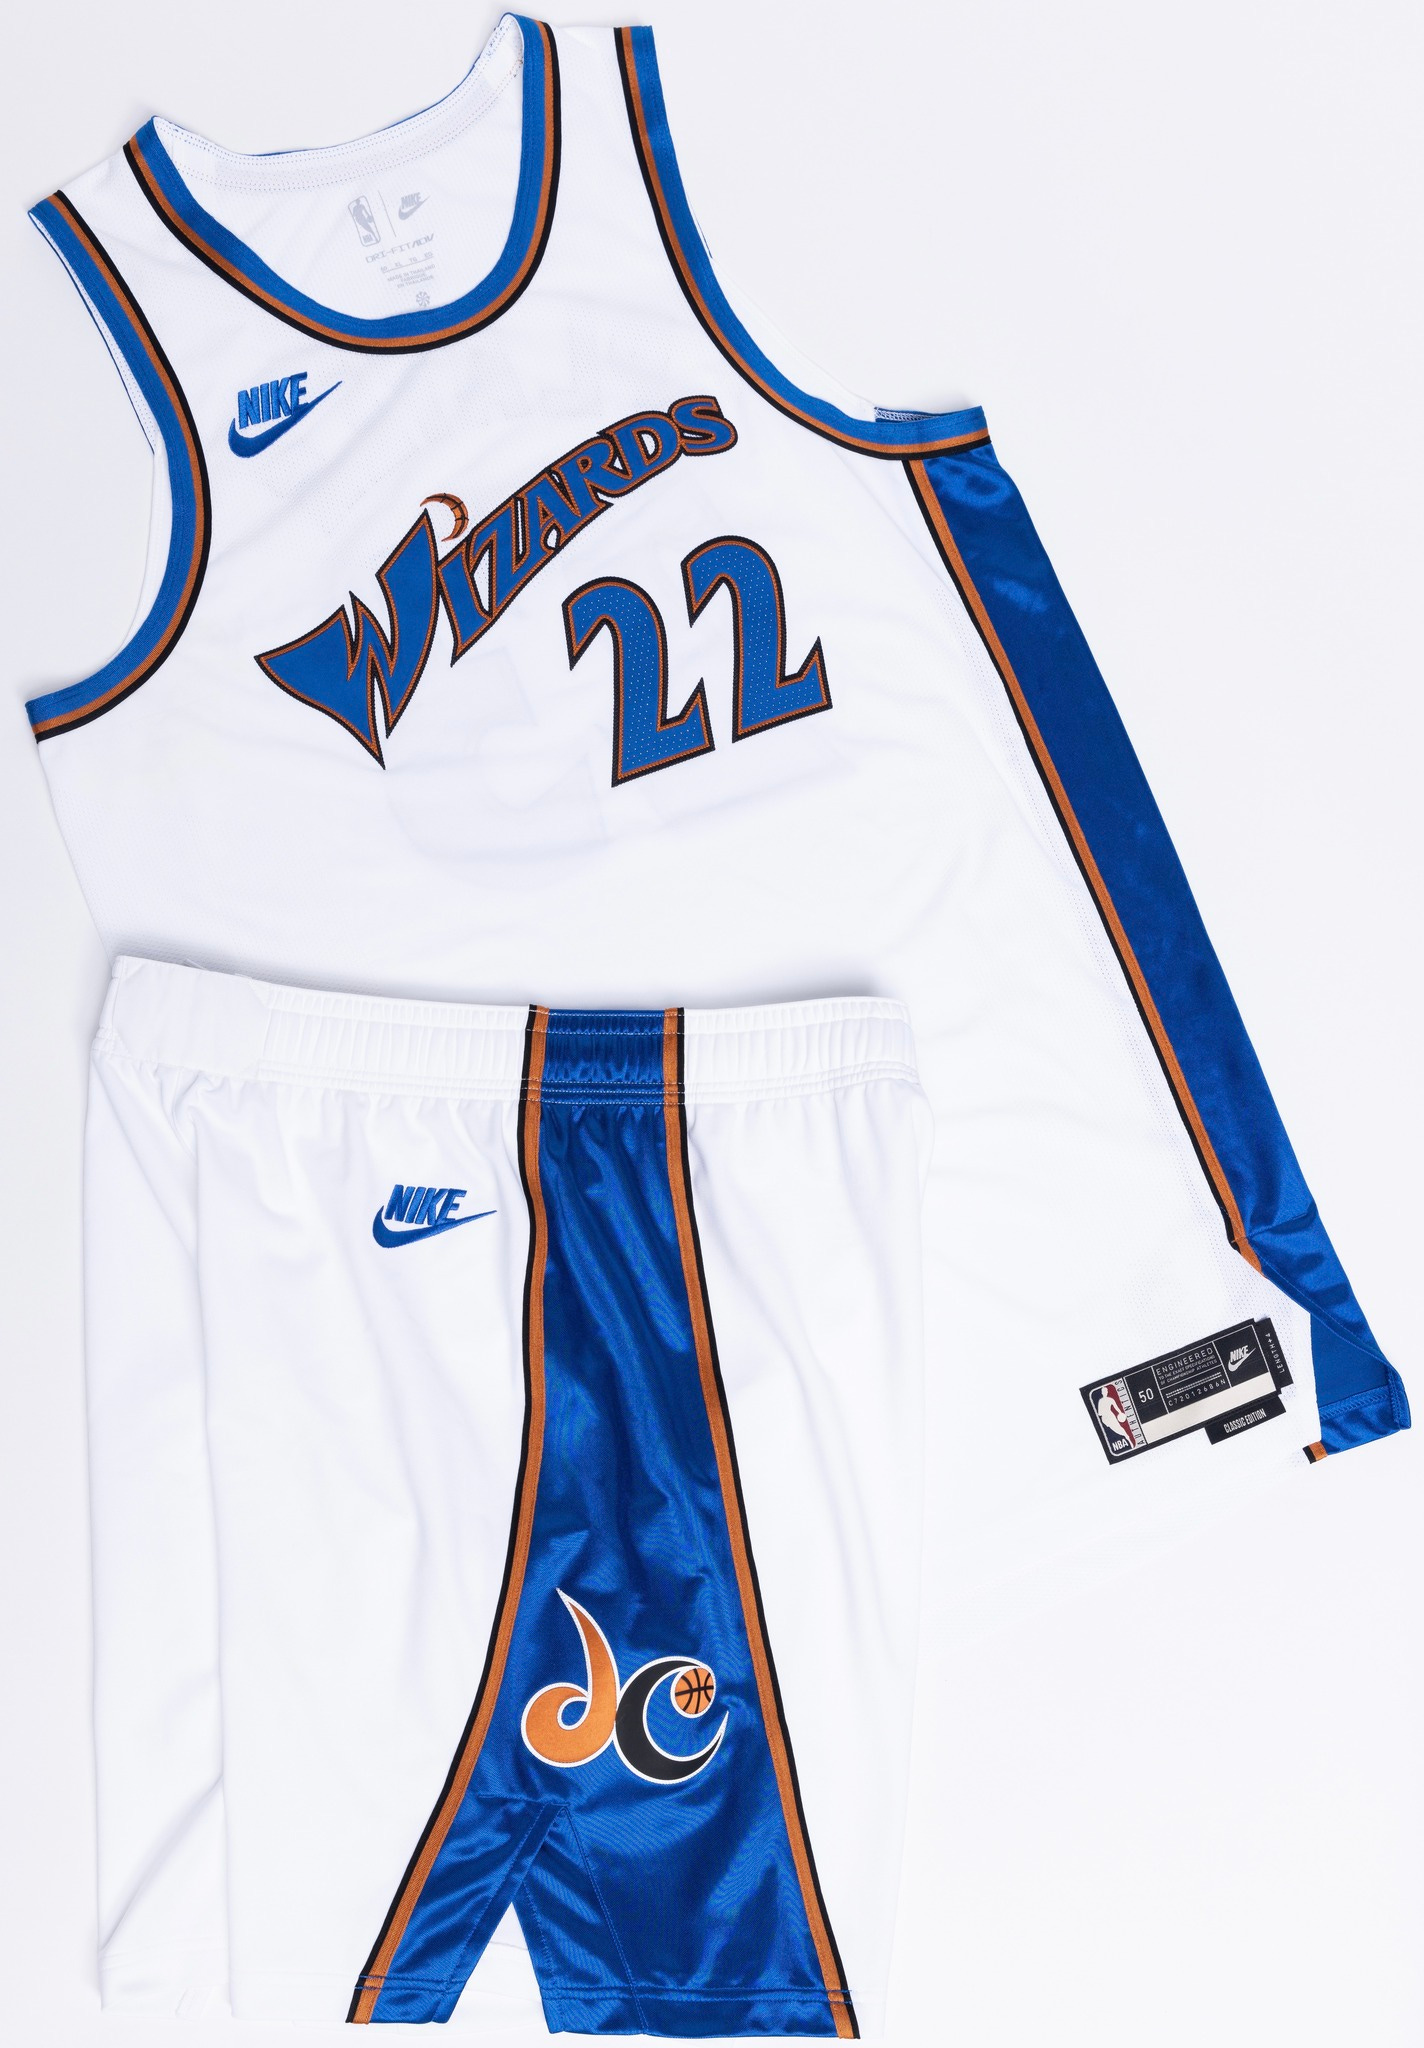 NBA_ Basketball Jerseys 30 2 Ball 77 9 33 basketball Star Costume1 New blue  white men''nba''jersey 